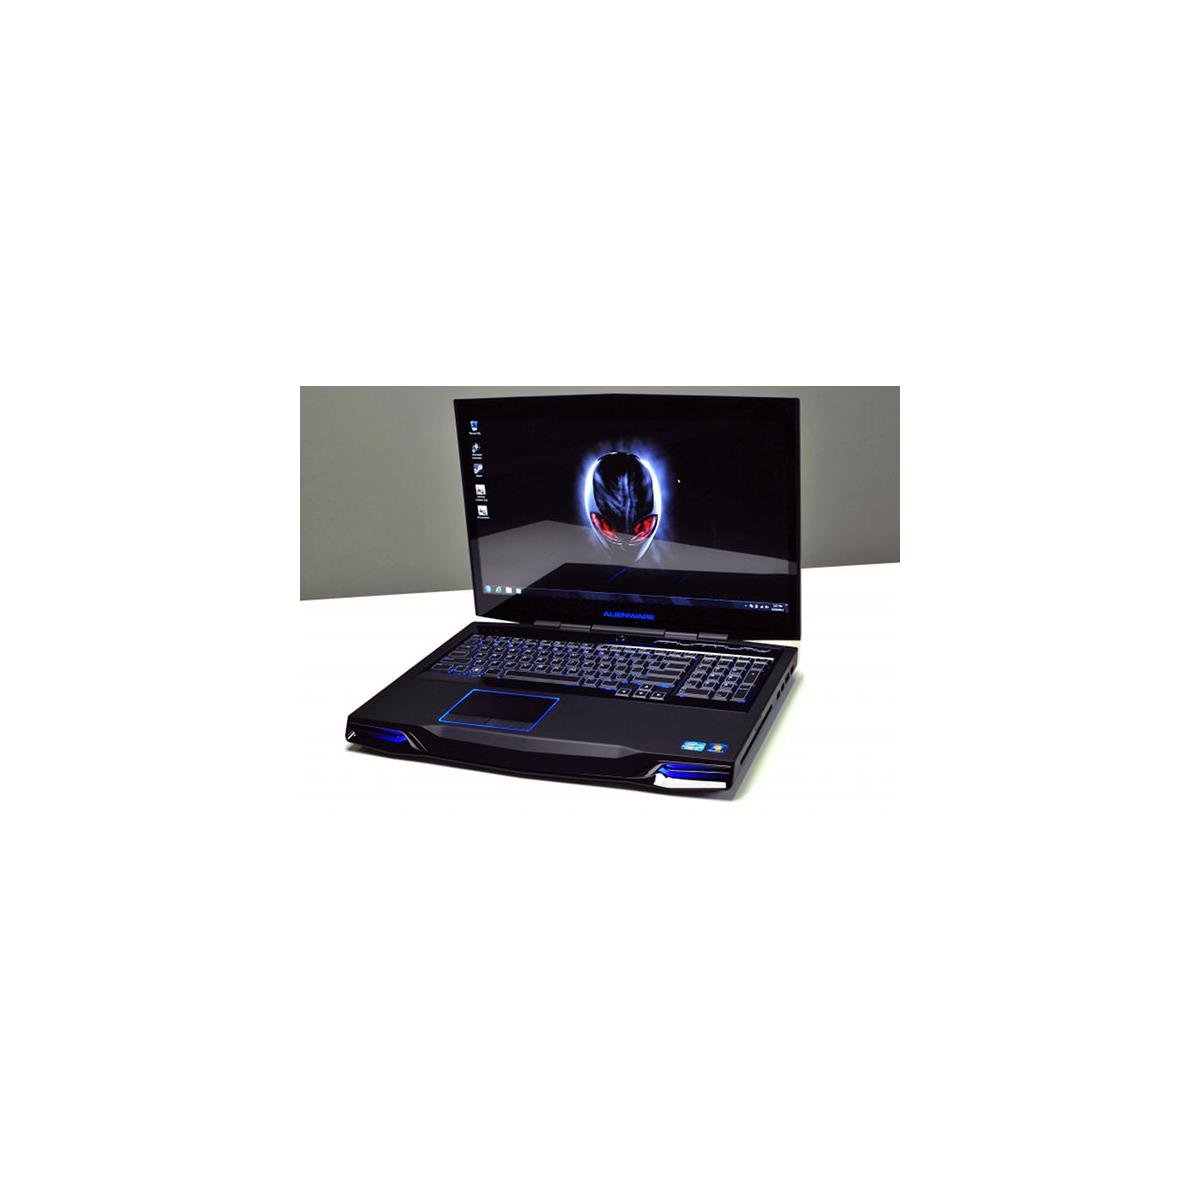 Alienware M17x R4 (2012), Ivy Bridge and Kepler Refresh | HotHardware